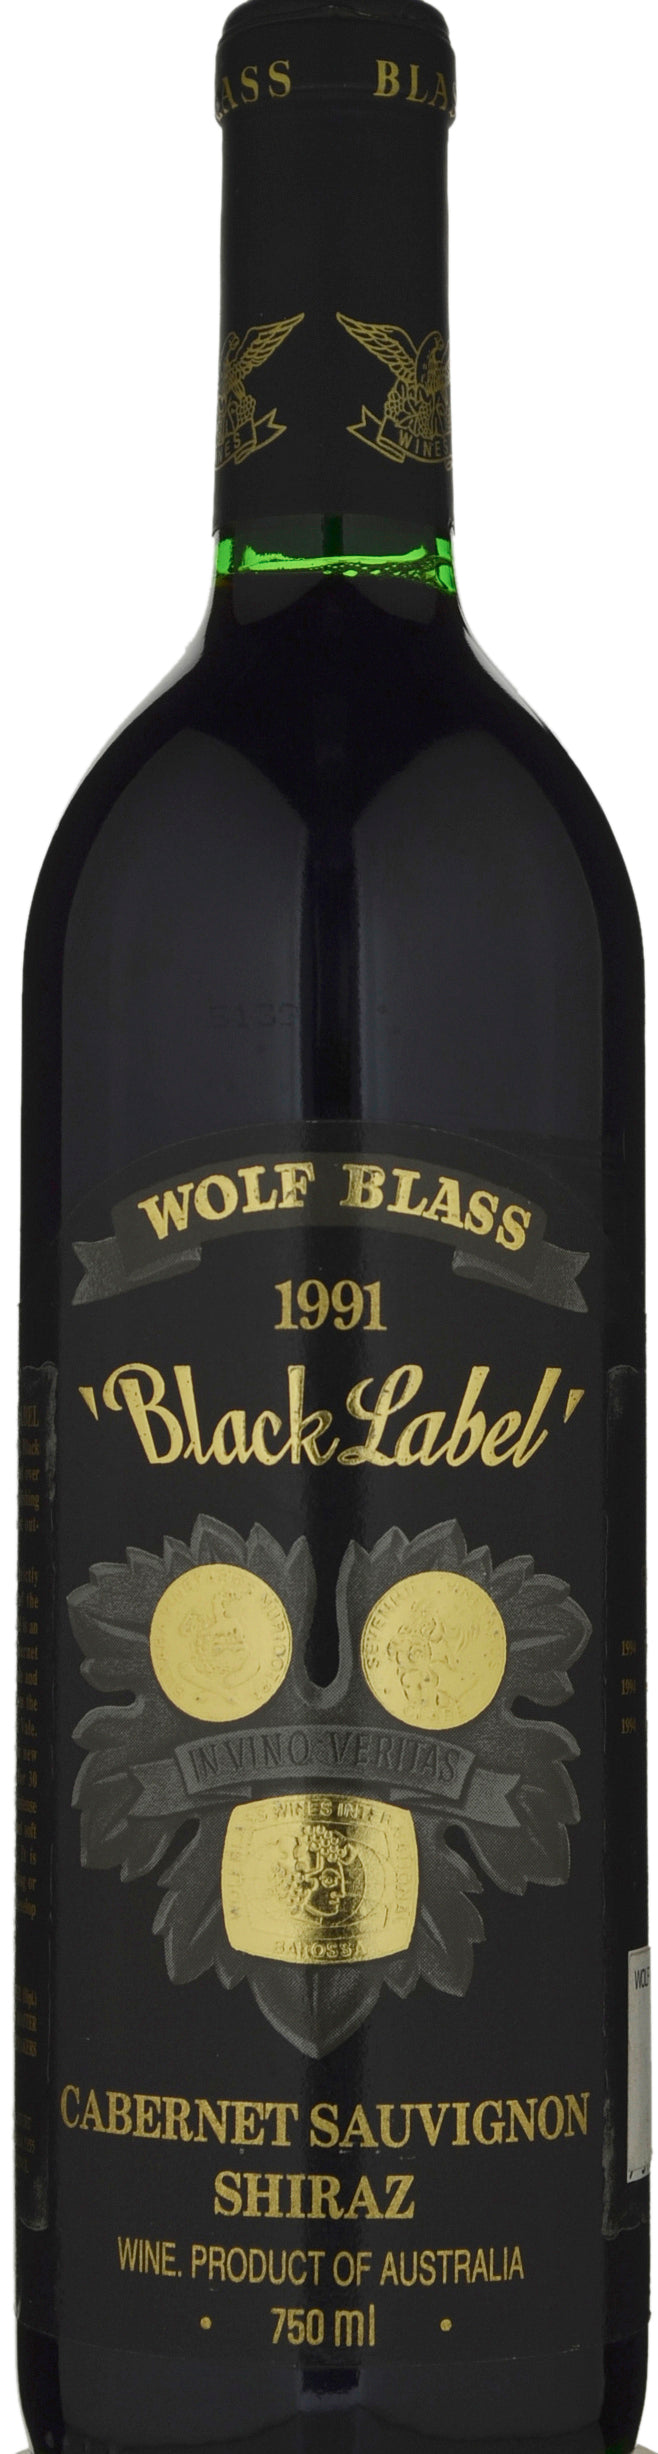 Wolf Blass Black Label Cabernet Shiraz 1991